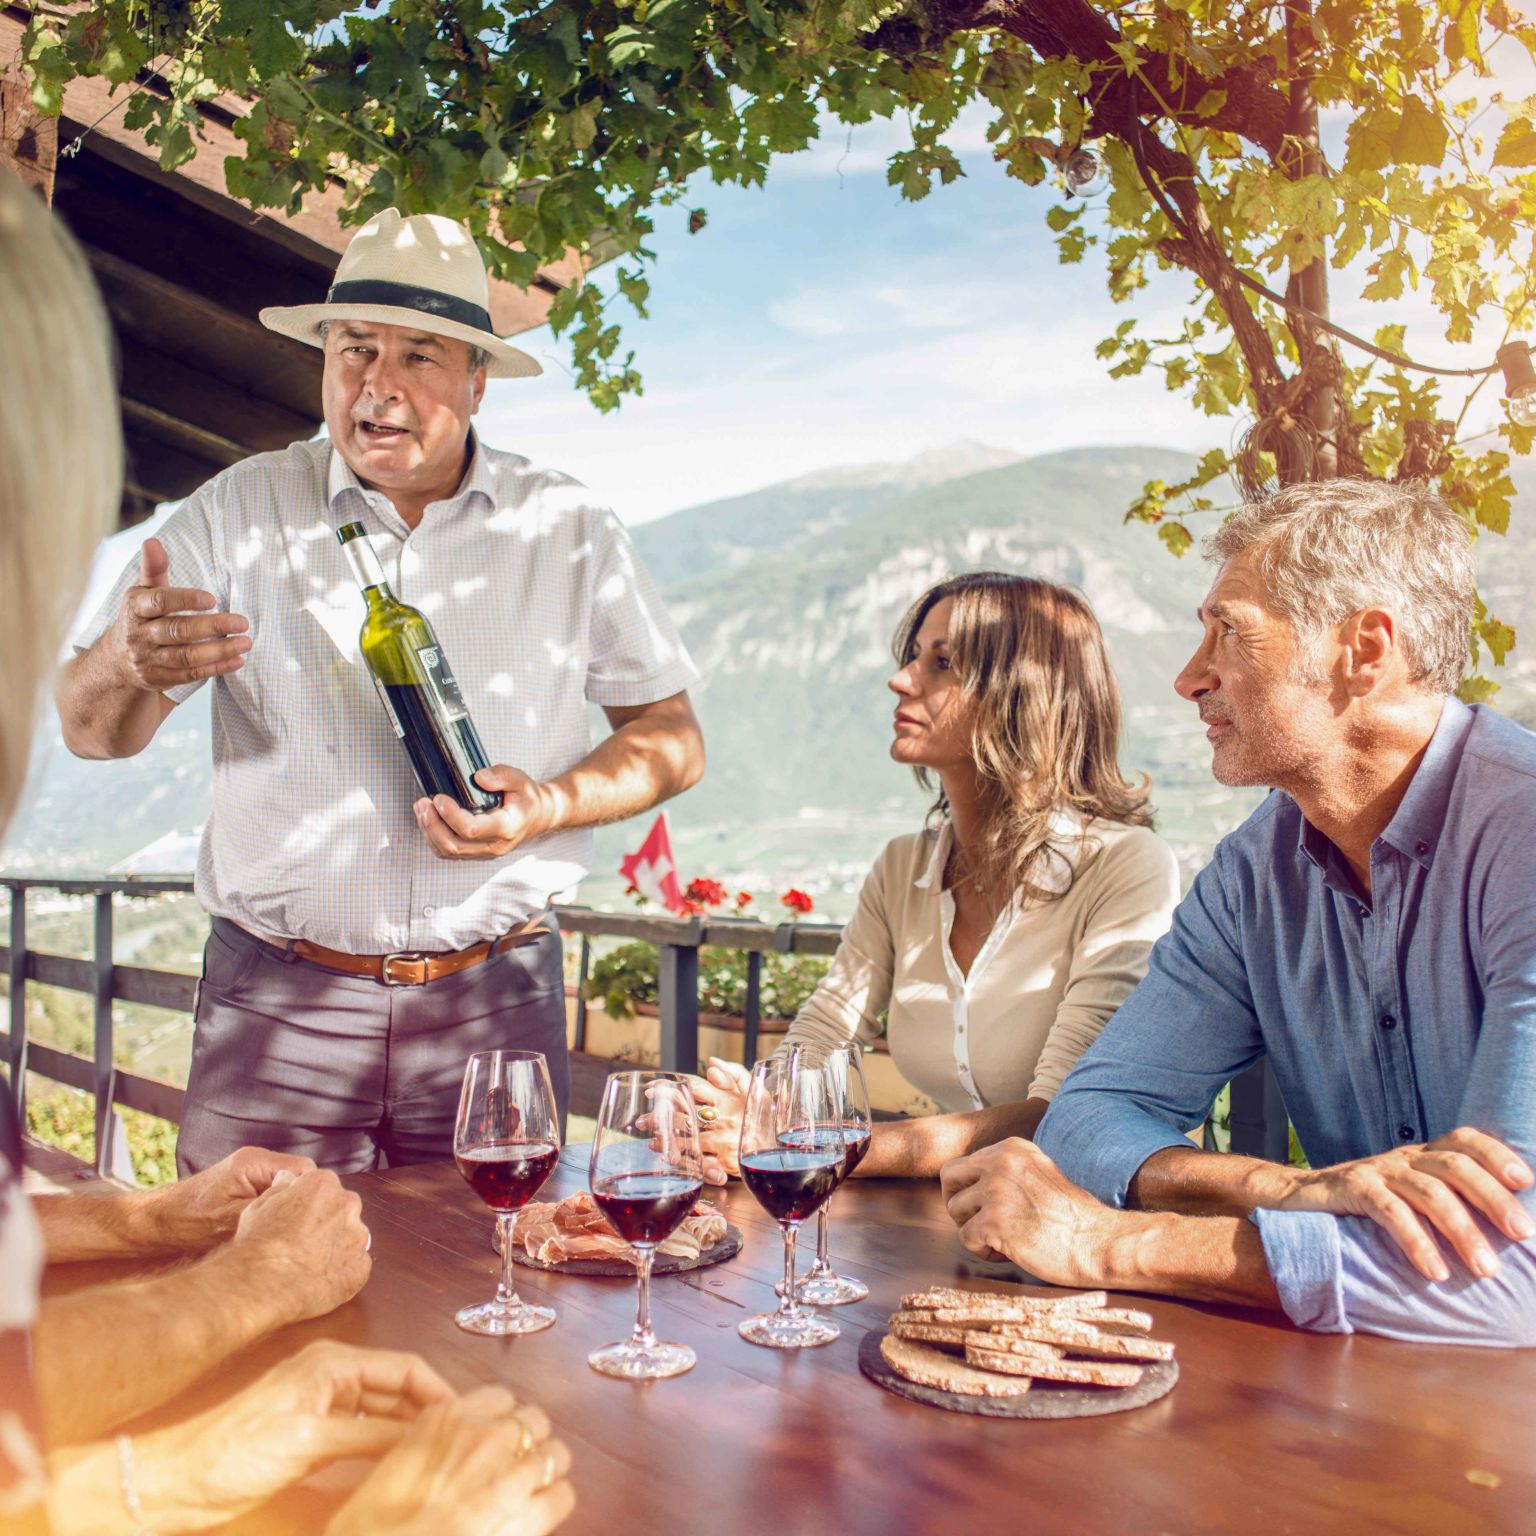 Open wine cellars, Oenotourism, Wine tasting, Valais, Switzerland